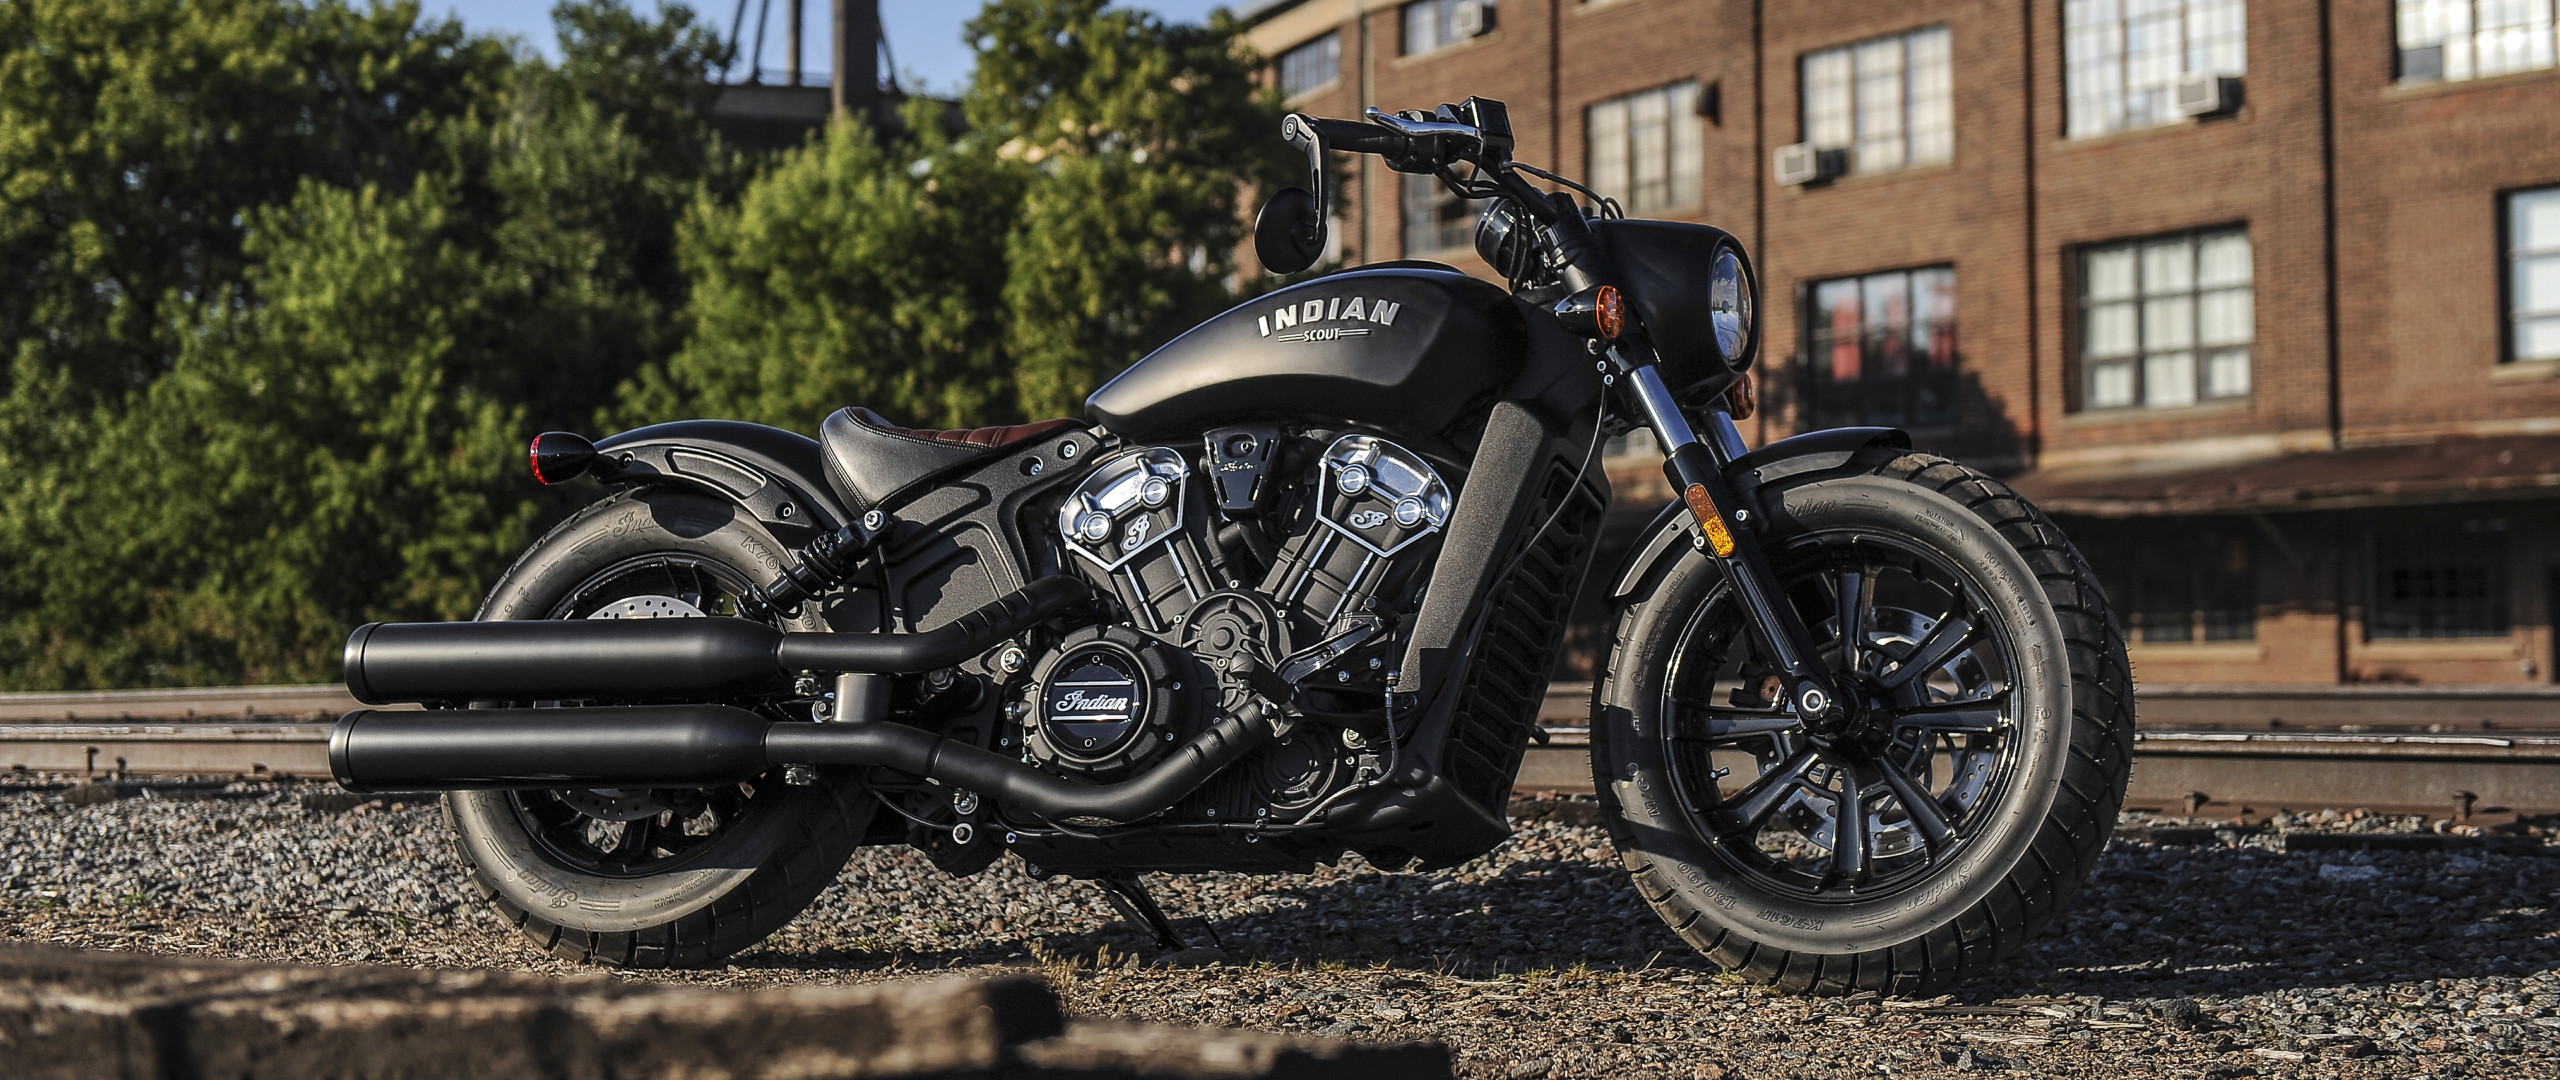 Indian Motorcycles Custom “Black Hills Beast” - Motorcycle & Powersports  News